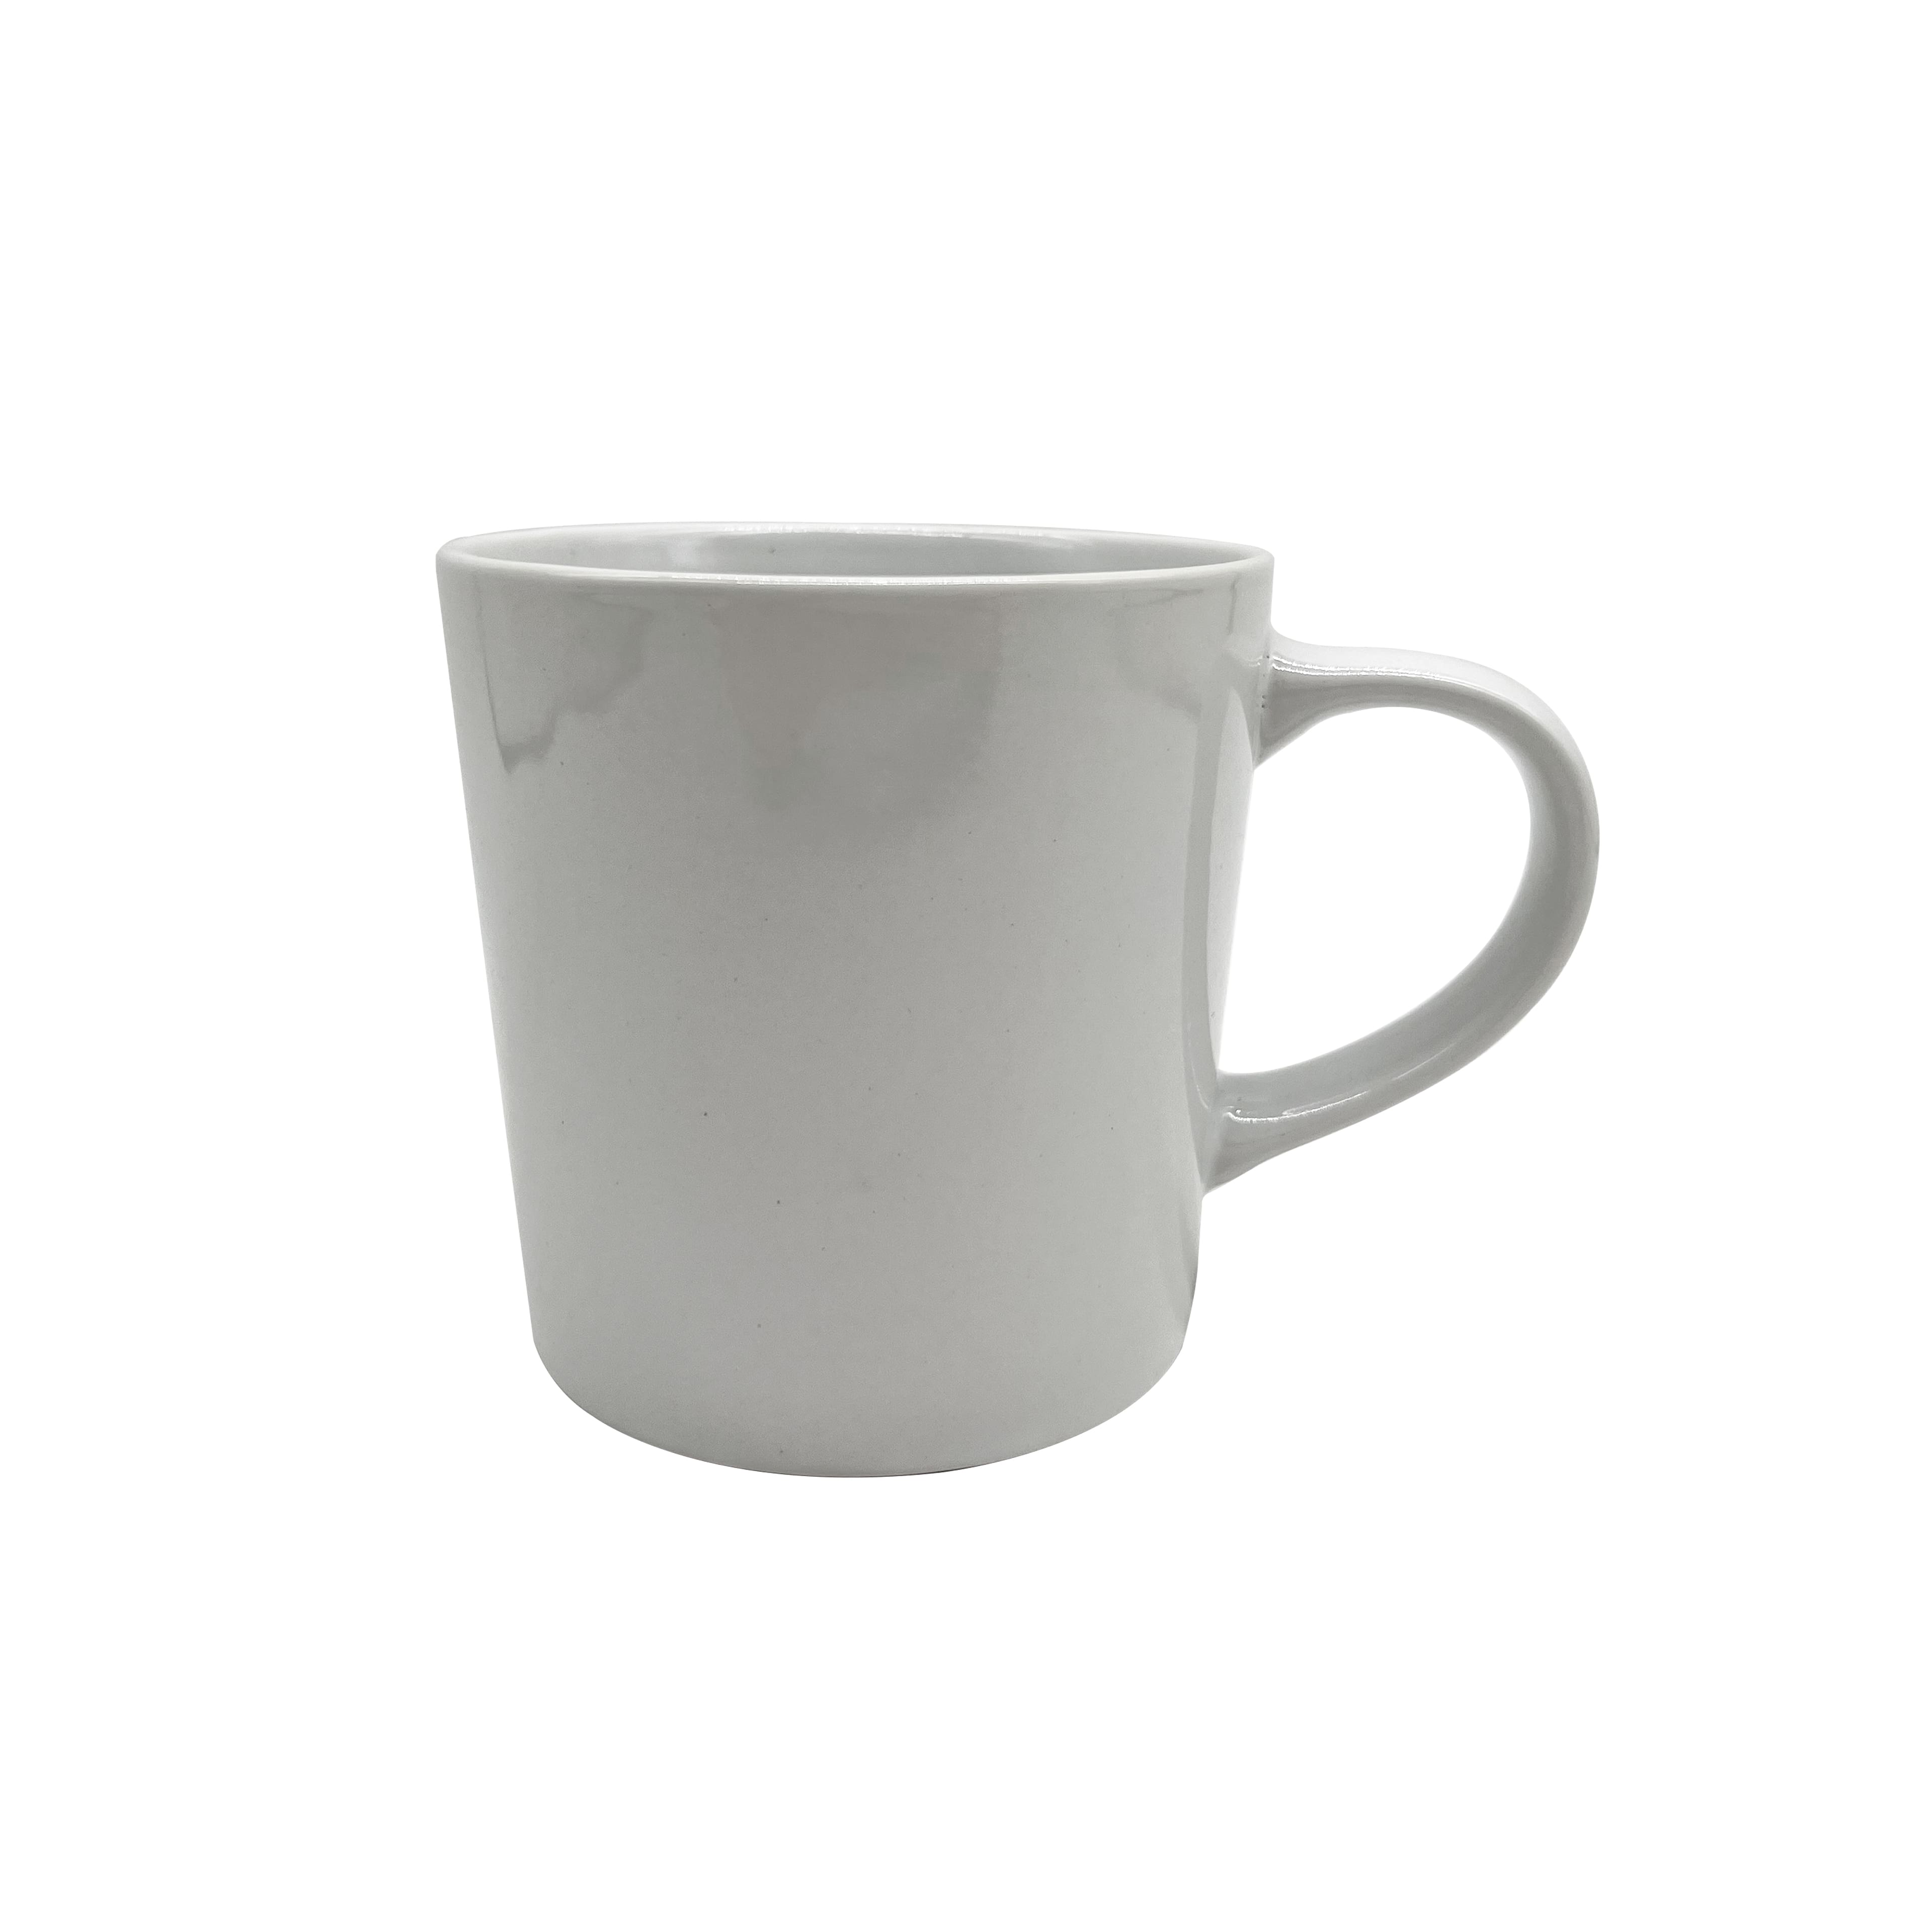 17.8oz. White Ceramic Mug by Celebrate It&#x2122;